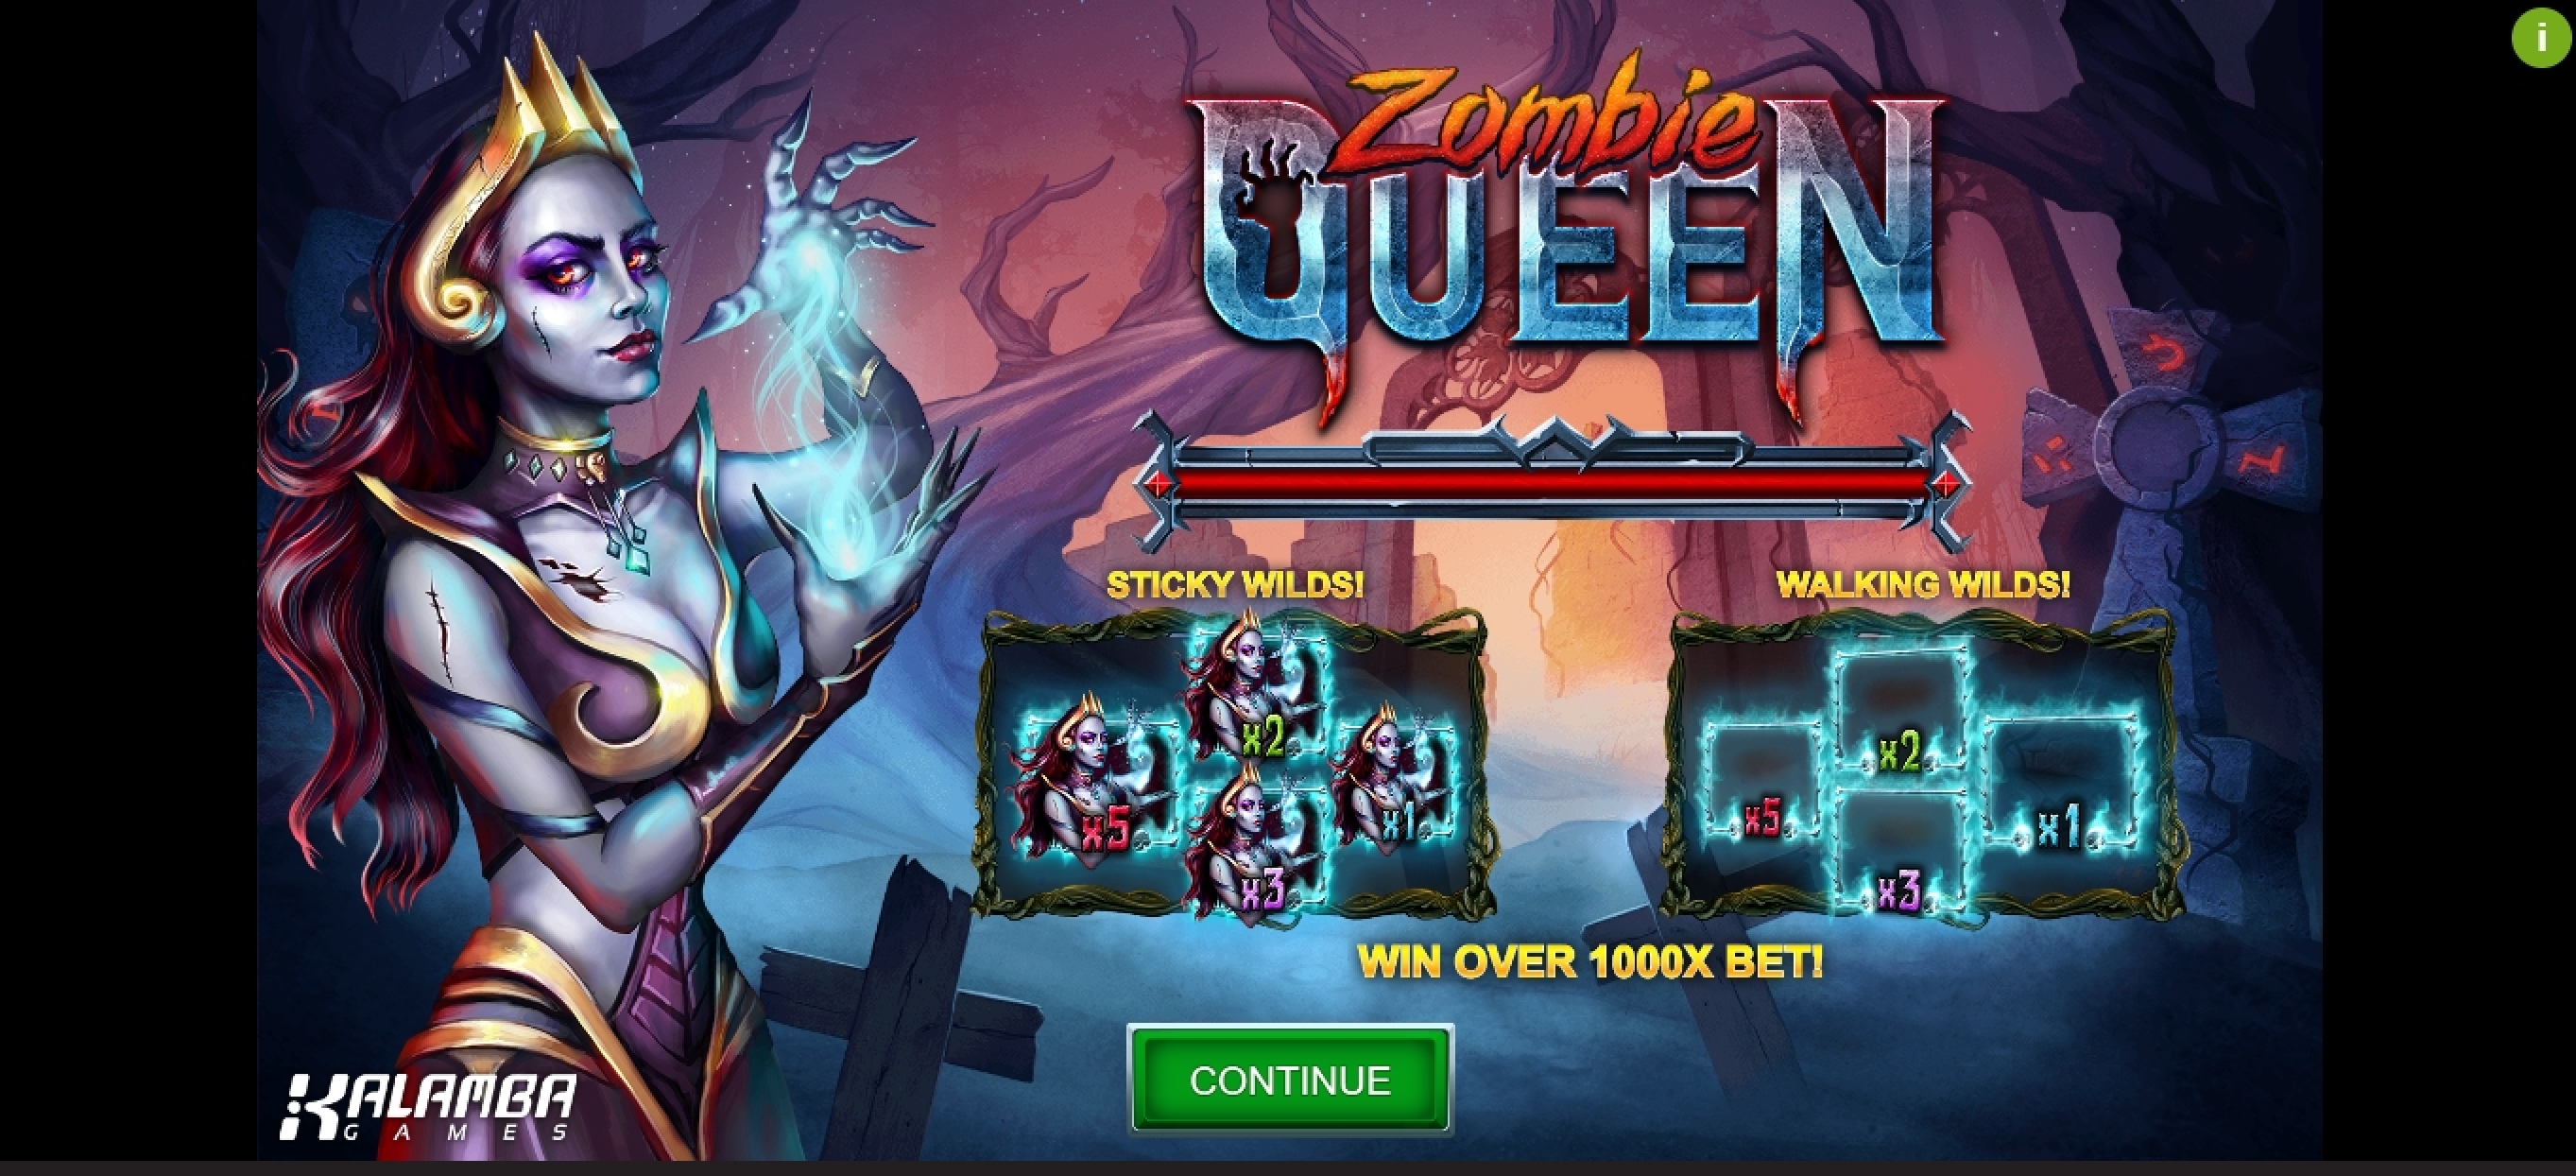 Mega win. Zombie Queen by Kalamba Games